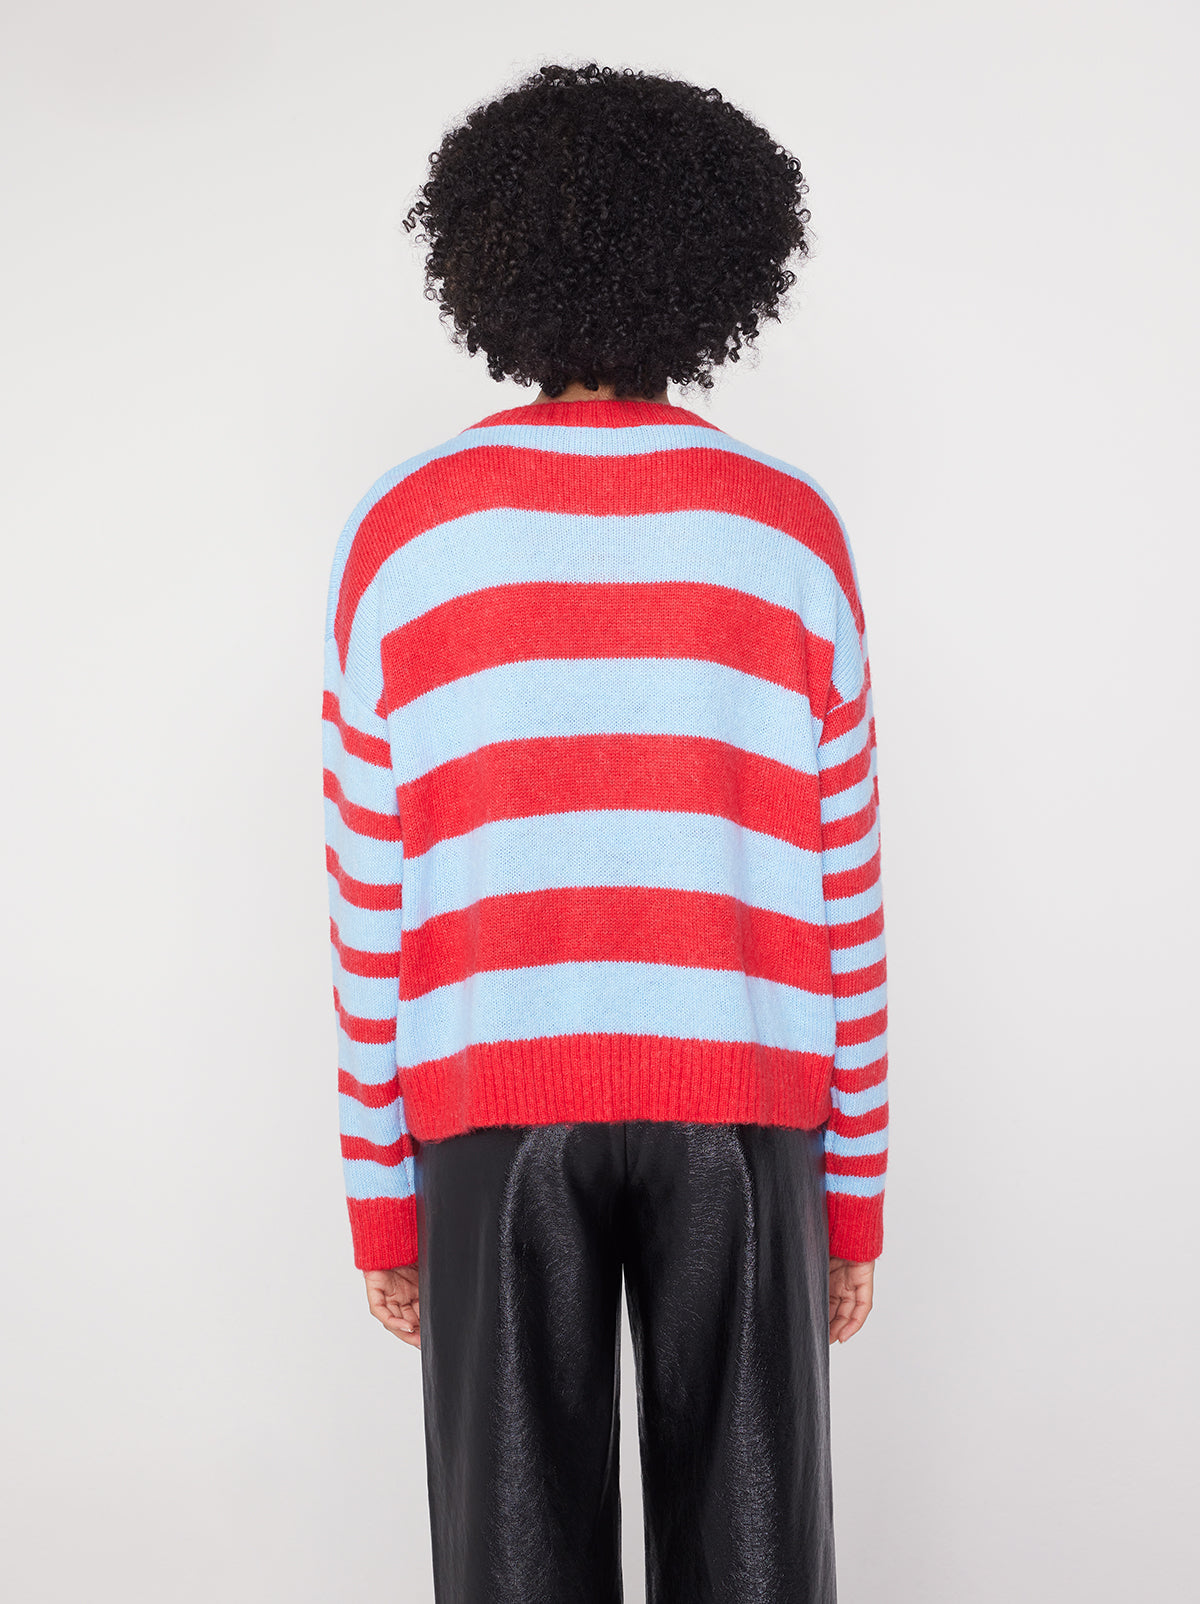 Darina Watermelon Stripe Sweater By KITRI Studio